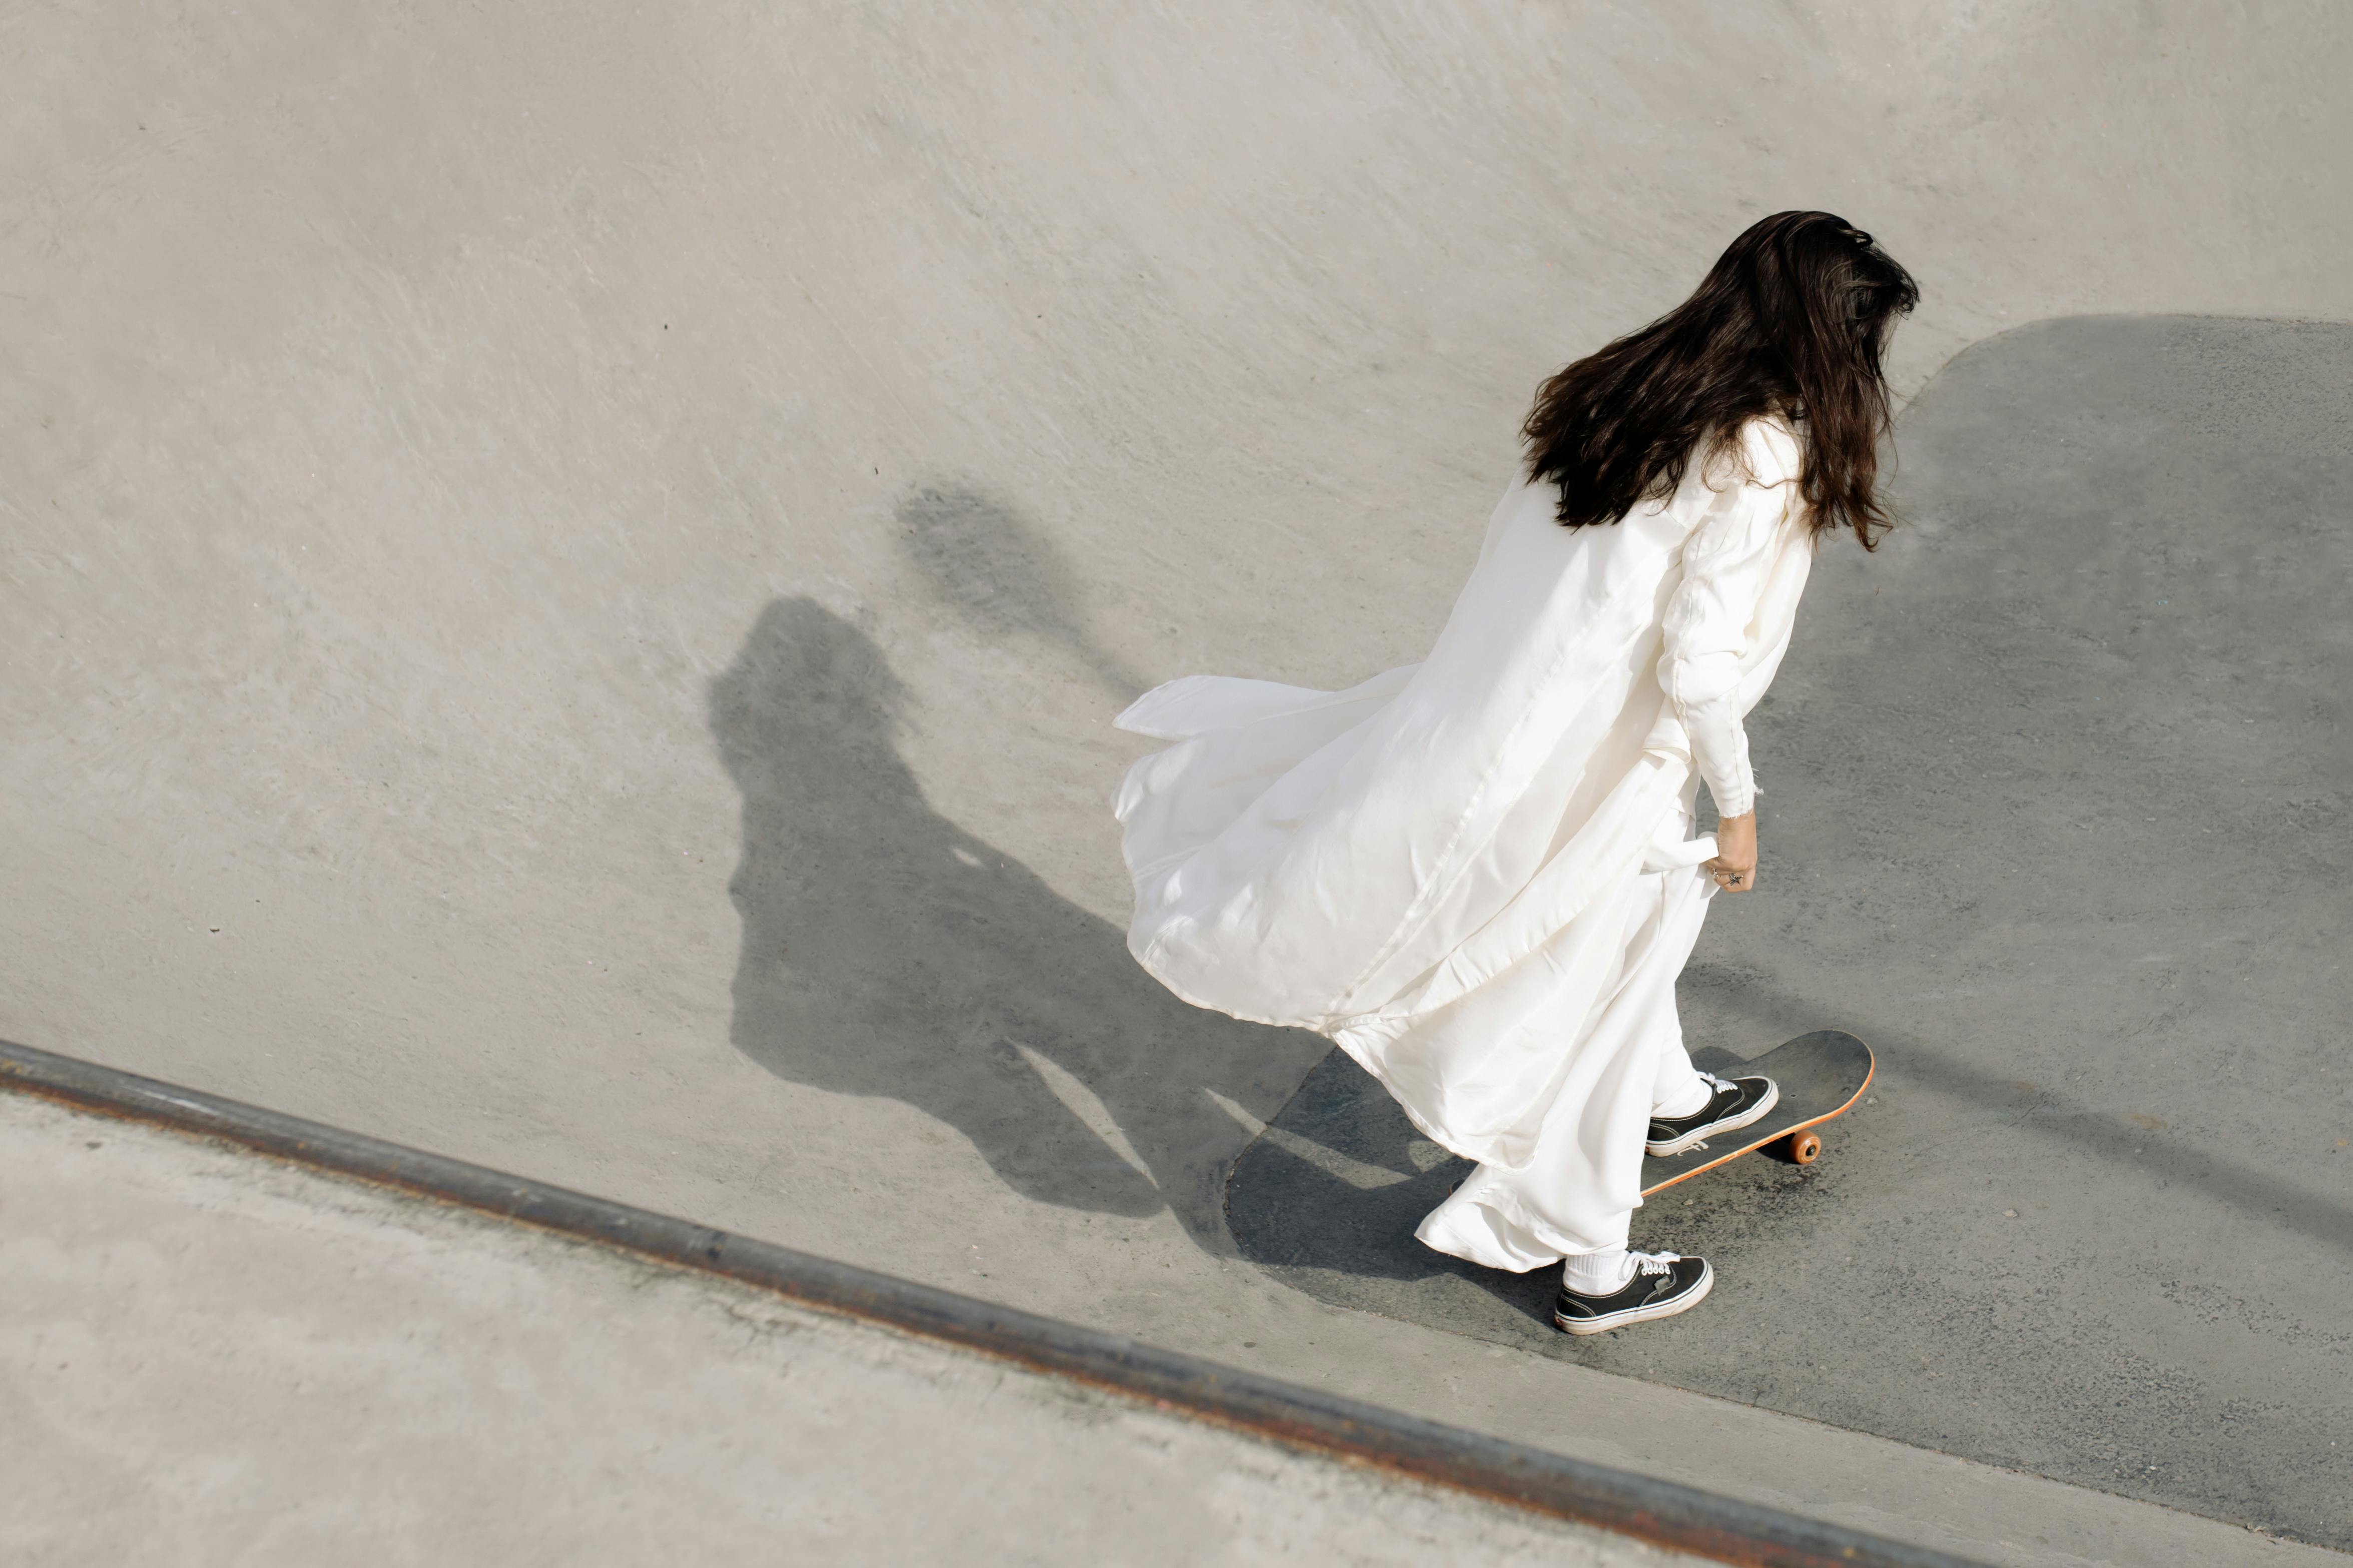 Ladies Holding Skateboard · Free Stock Photo